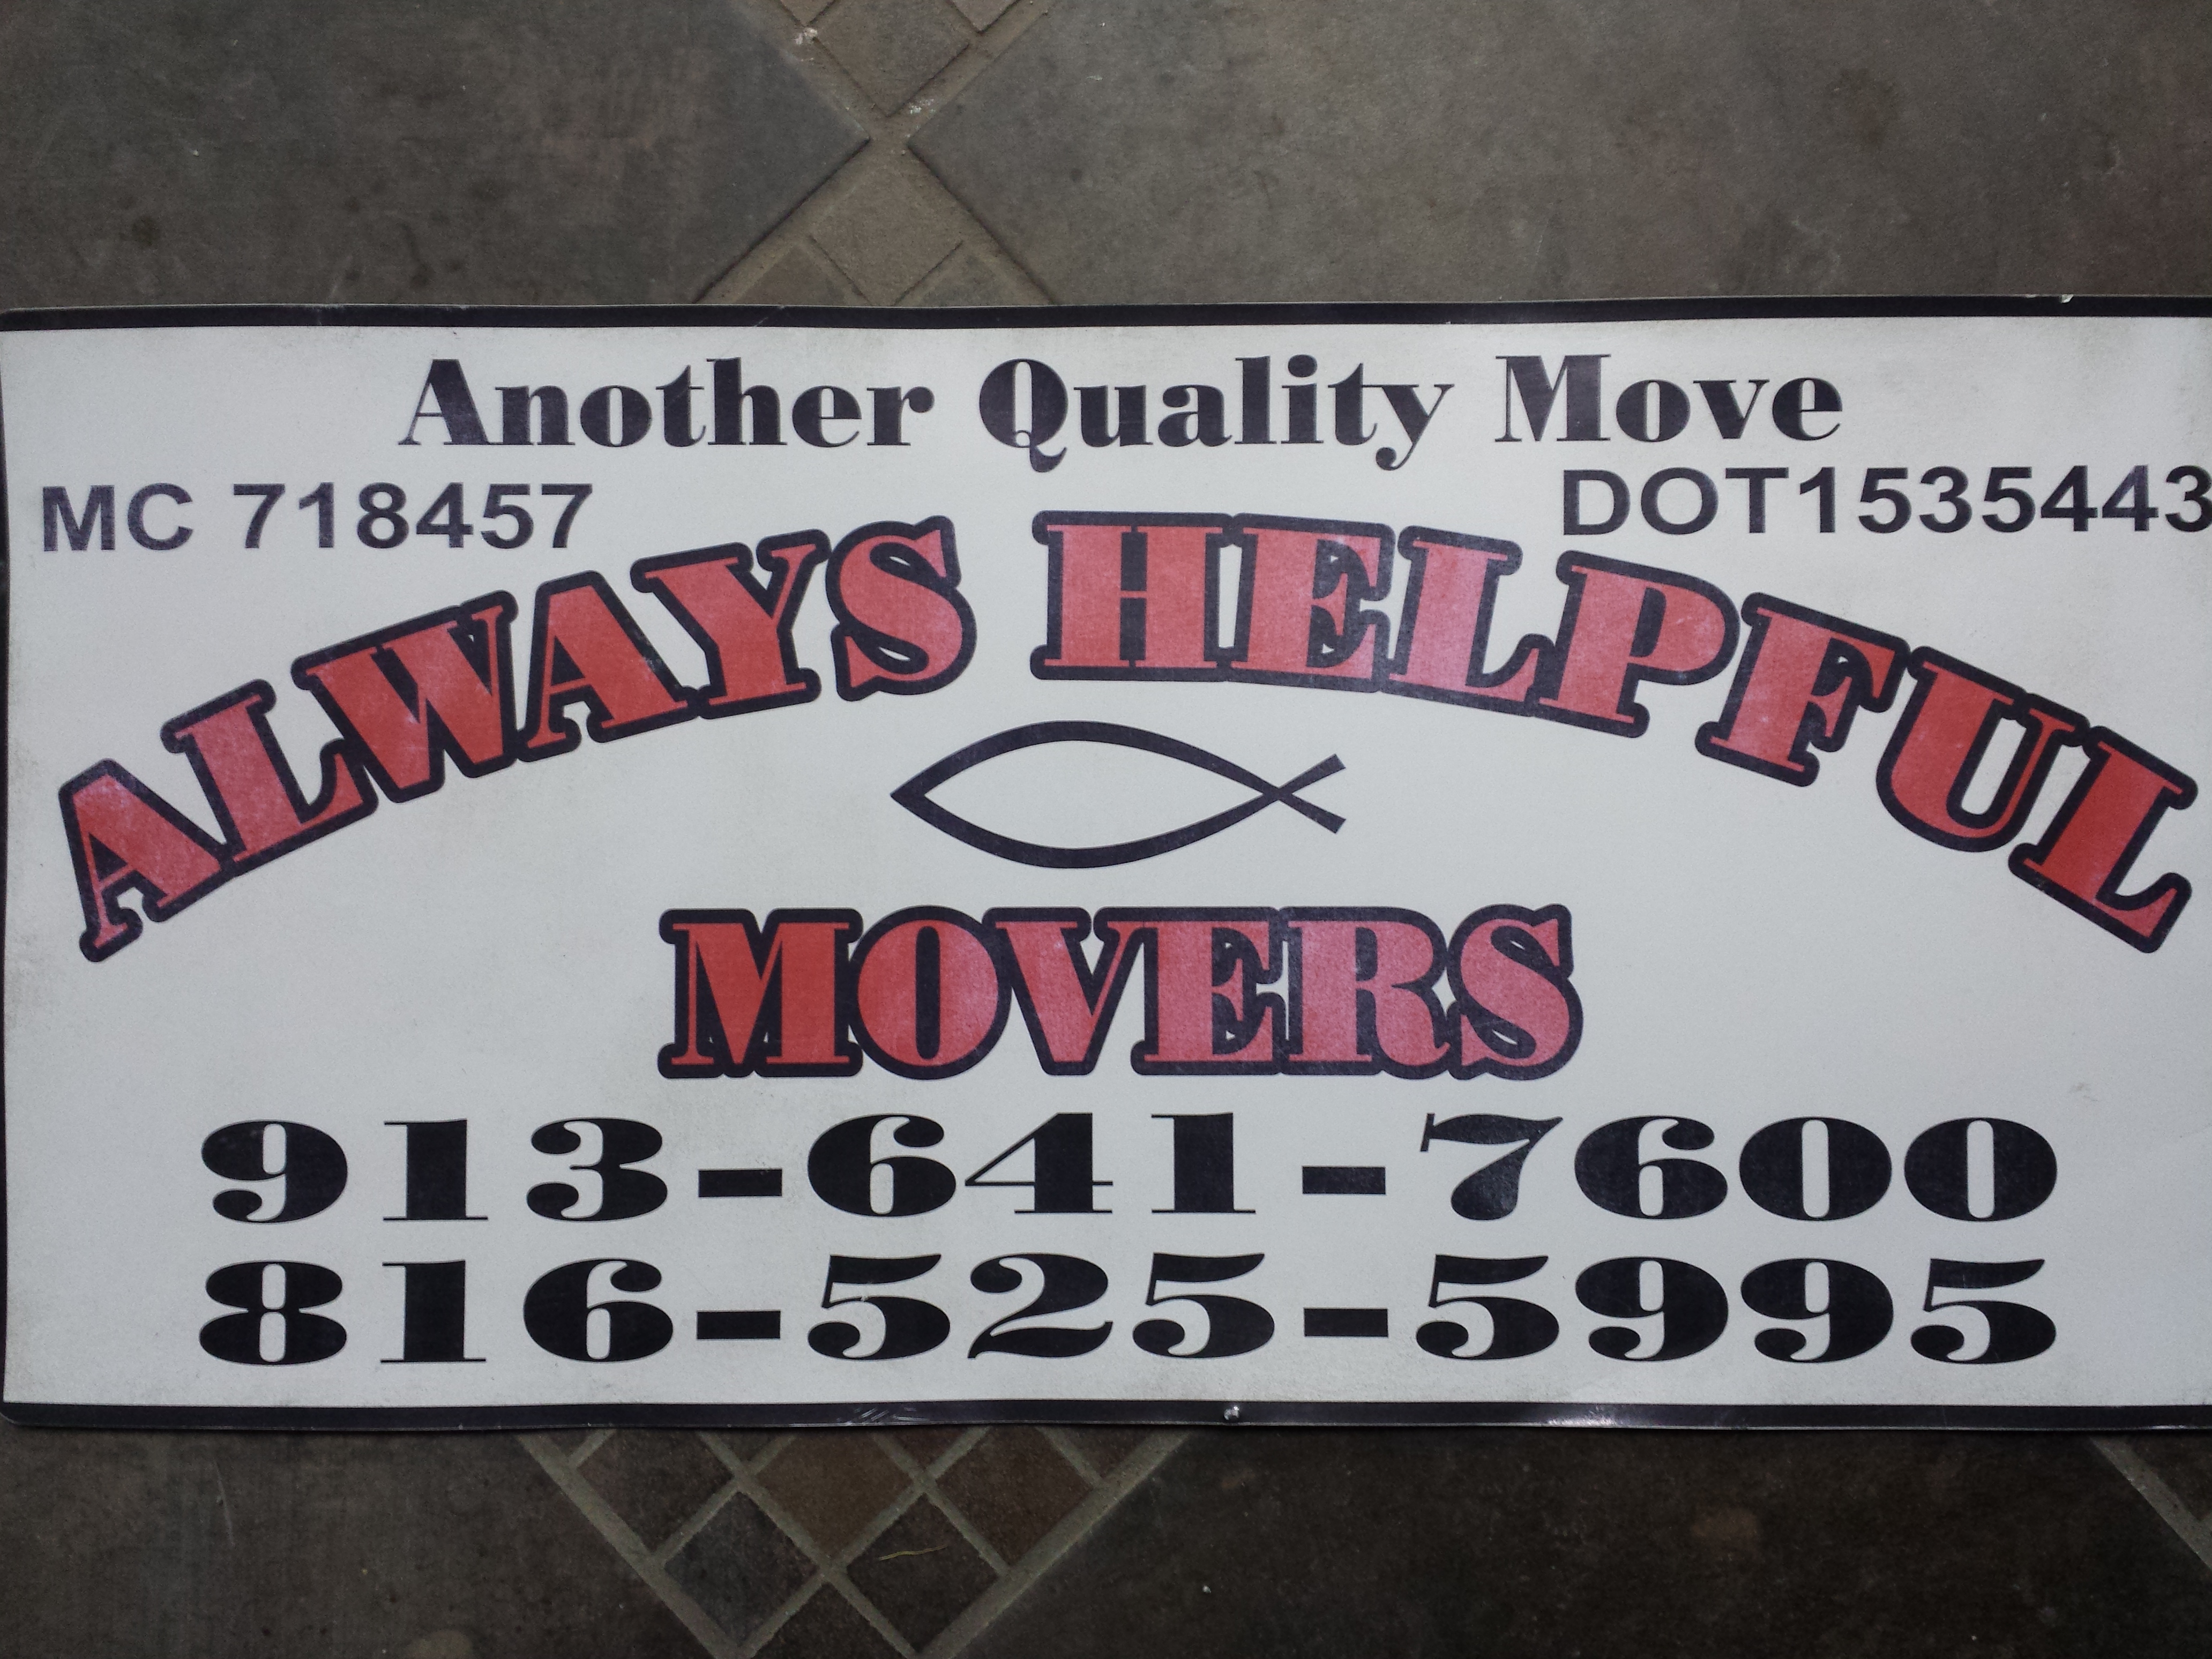 Always Helpful Movers Logo